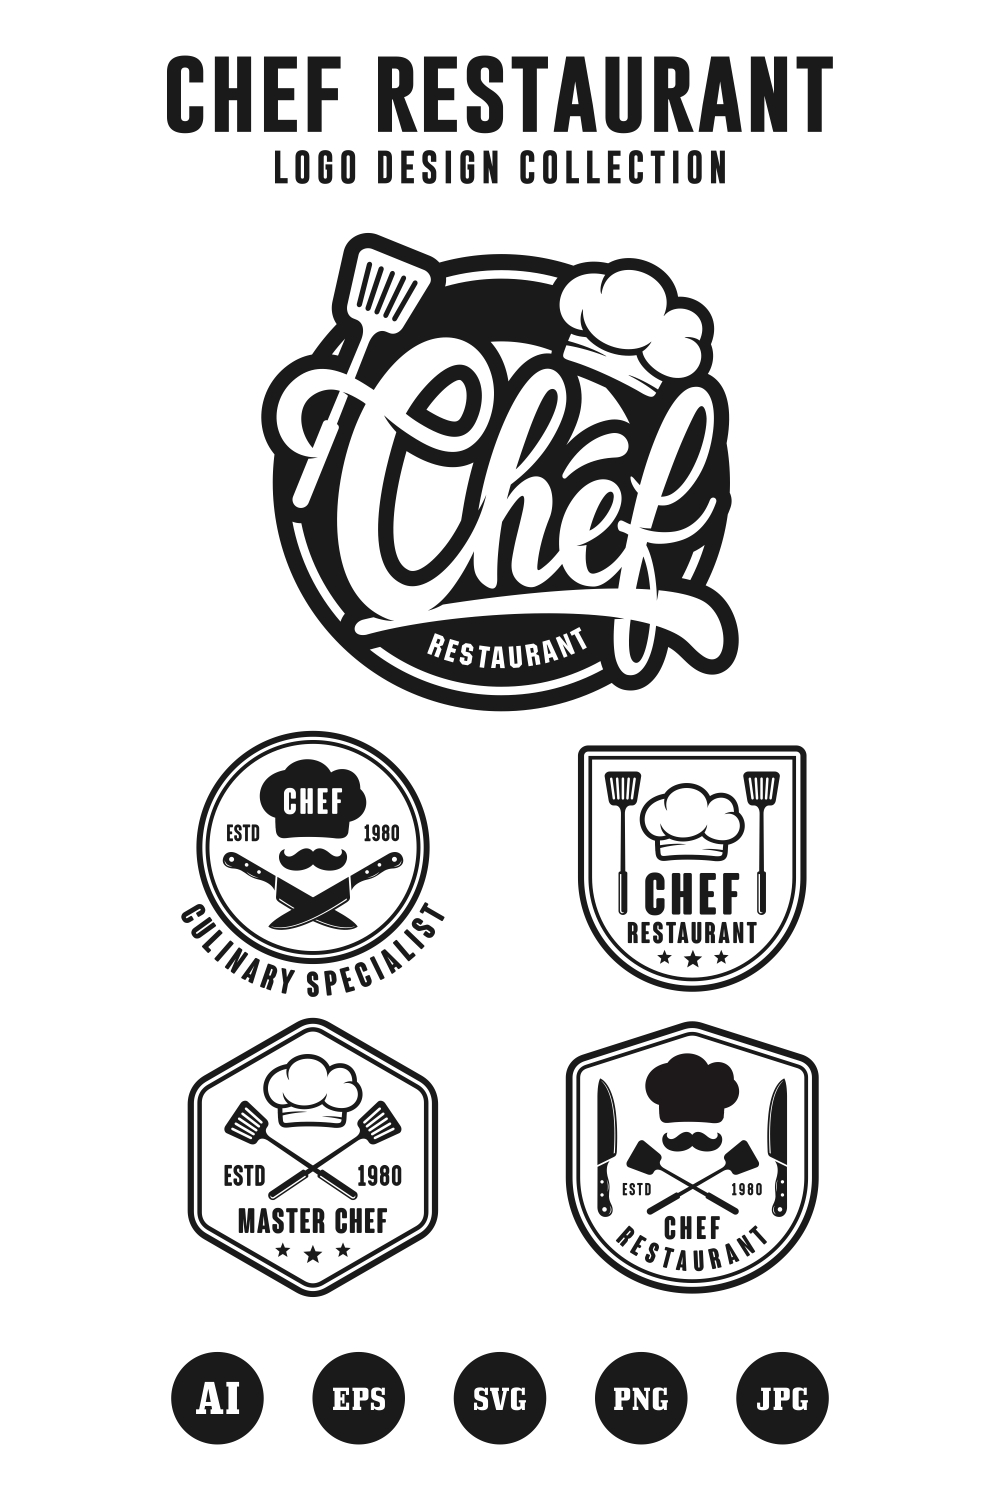 5 Chef Restaurant design logo collection pinterest preview image.